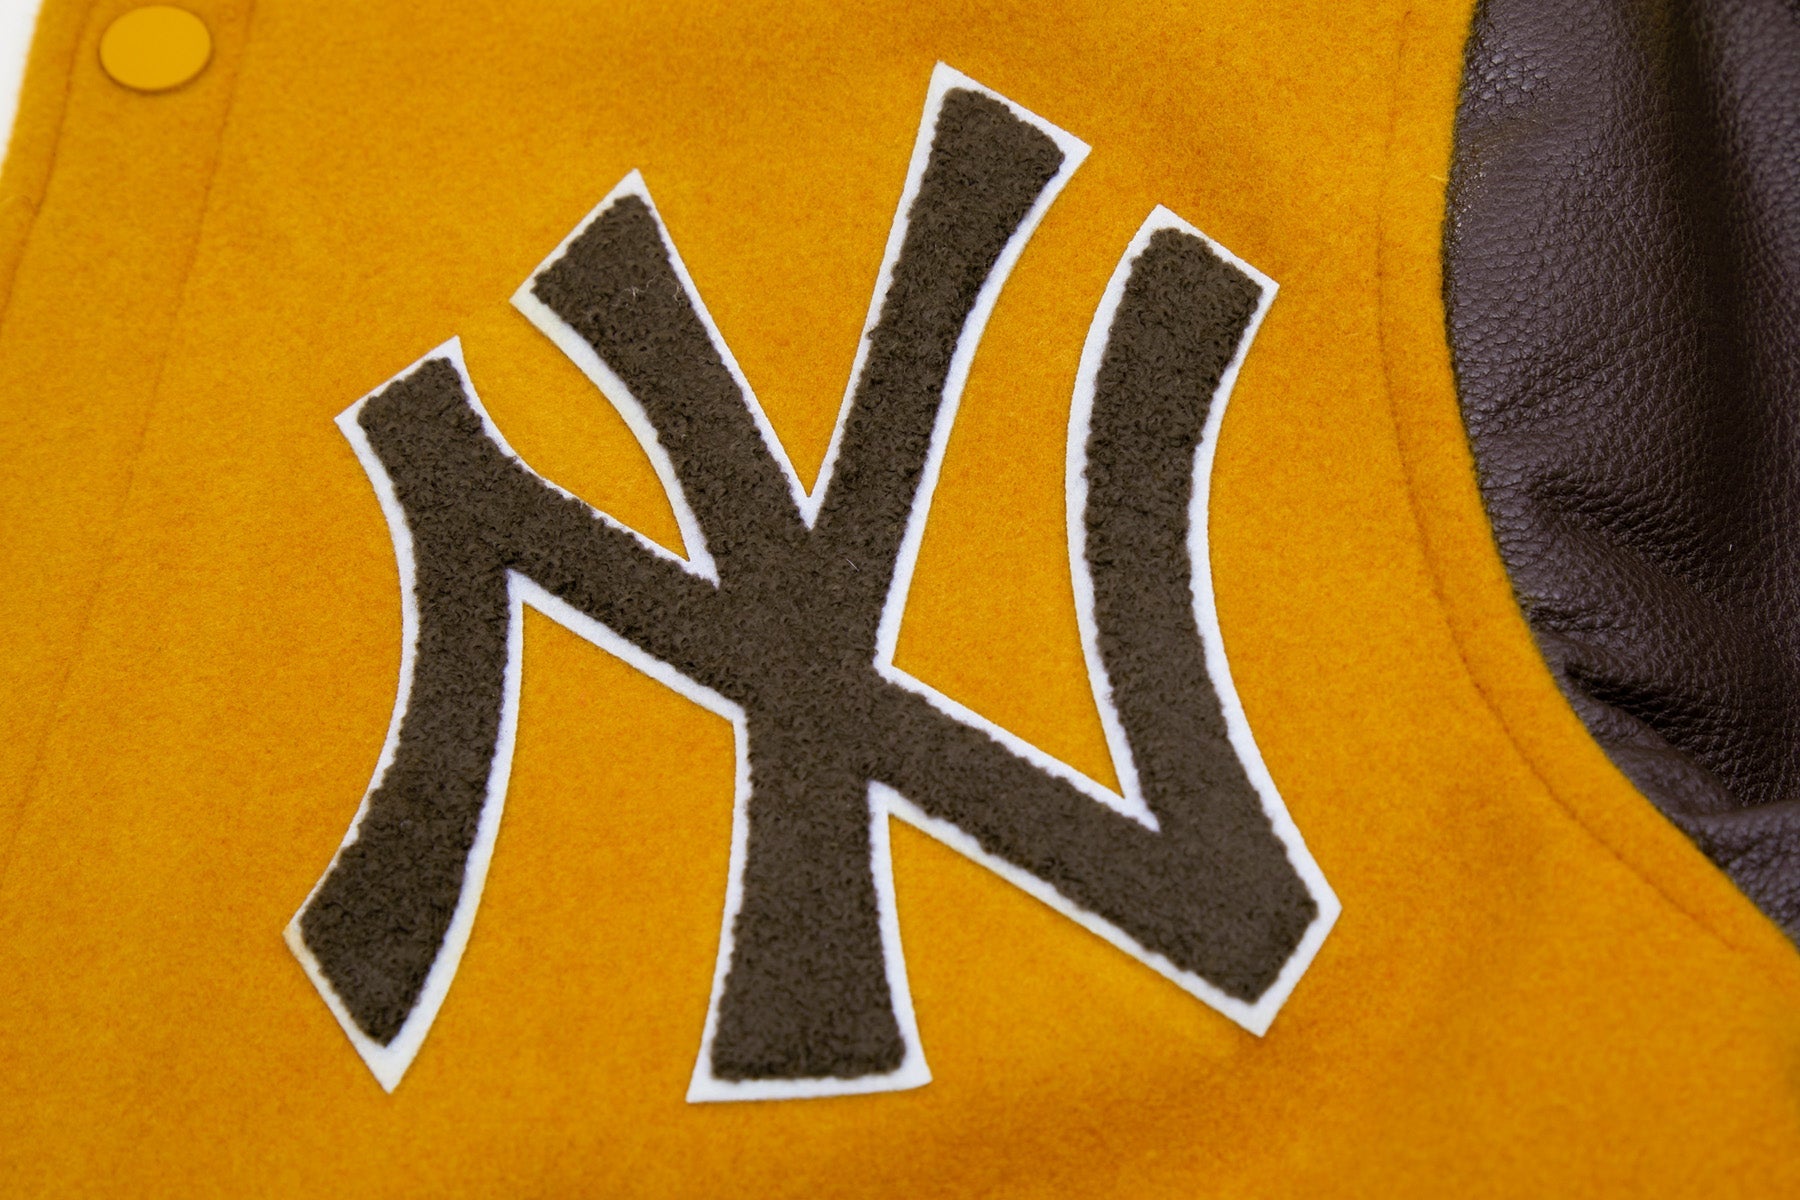 Pro Standard New York Yankees Classic Wool Varsity Jacket